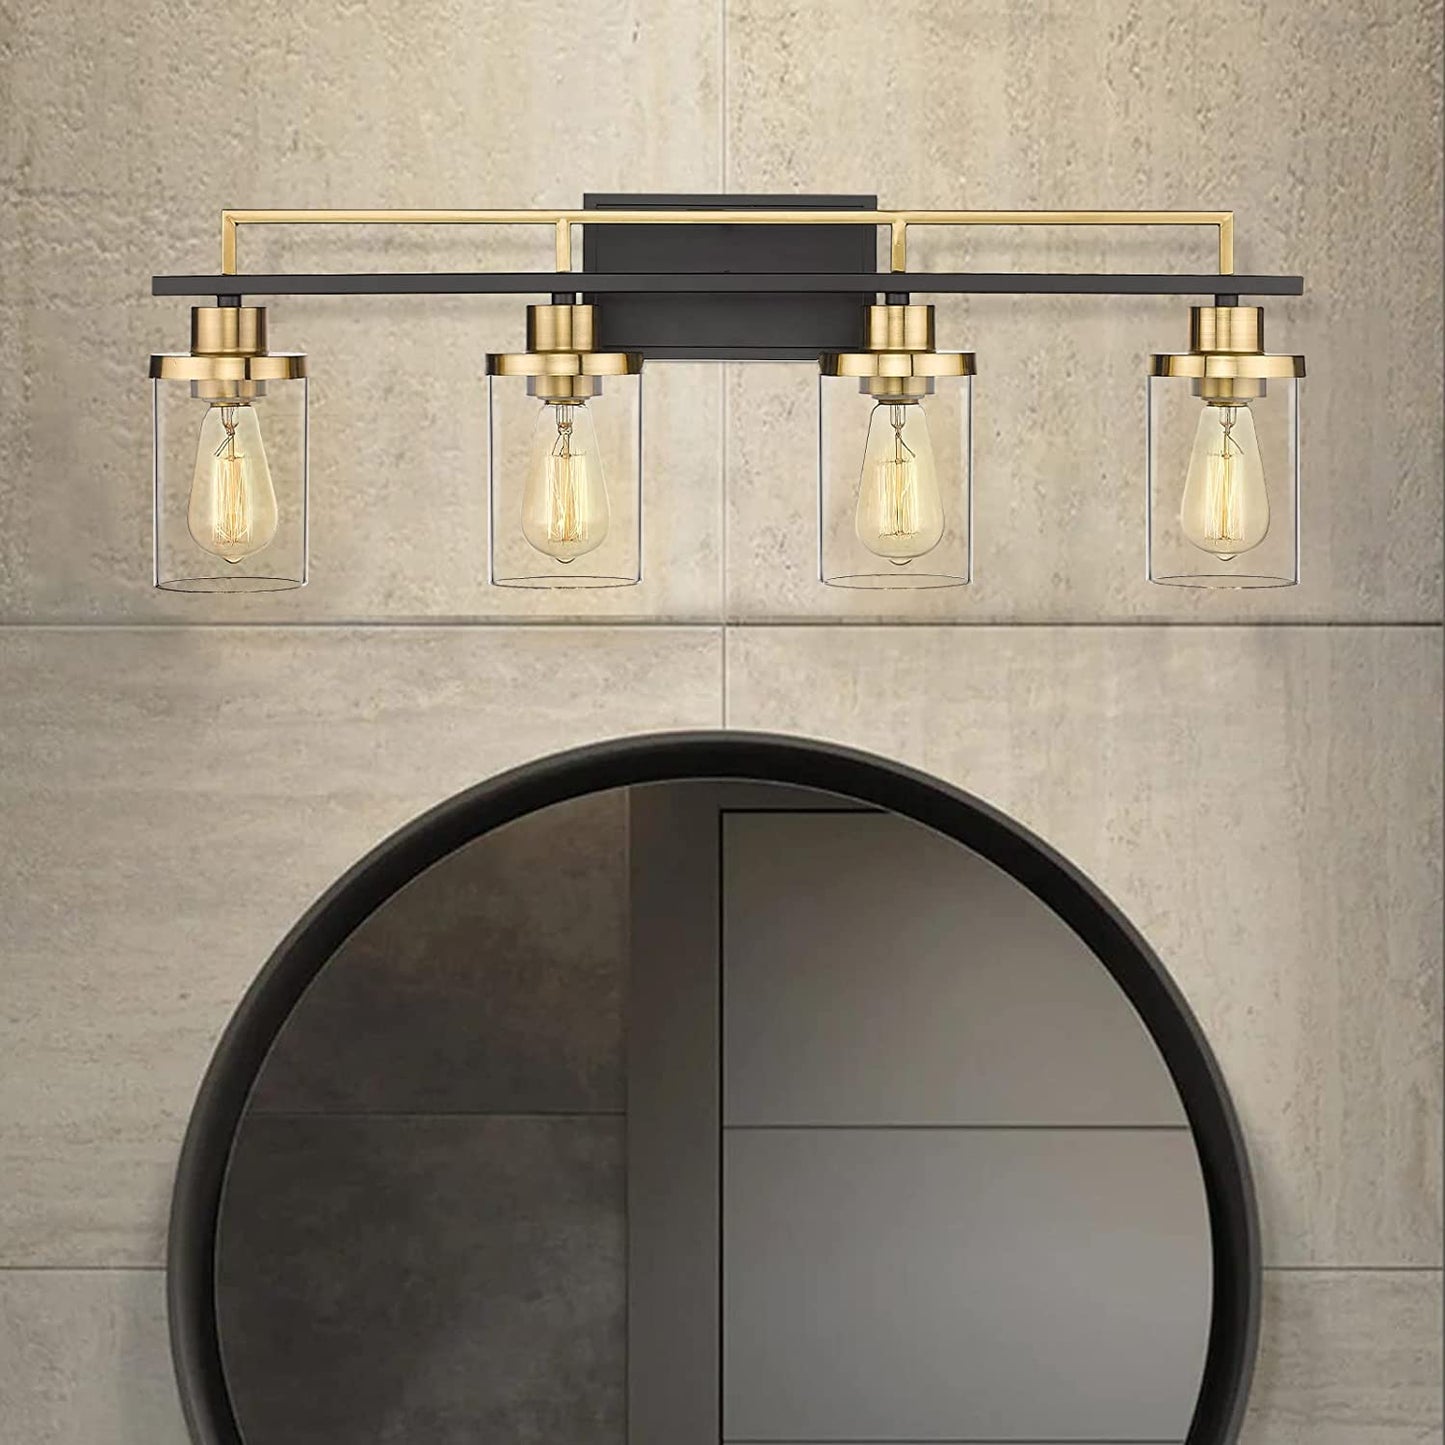 
                  
                    Emliviar Modern Bathroom Vanity Light - 4-Light Wall Lights for Bathroom, Black and Gold Finish with Clear Glass,YCE238B-4W BK+BG
                  
                